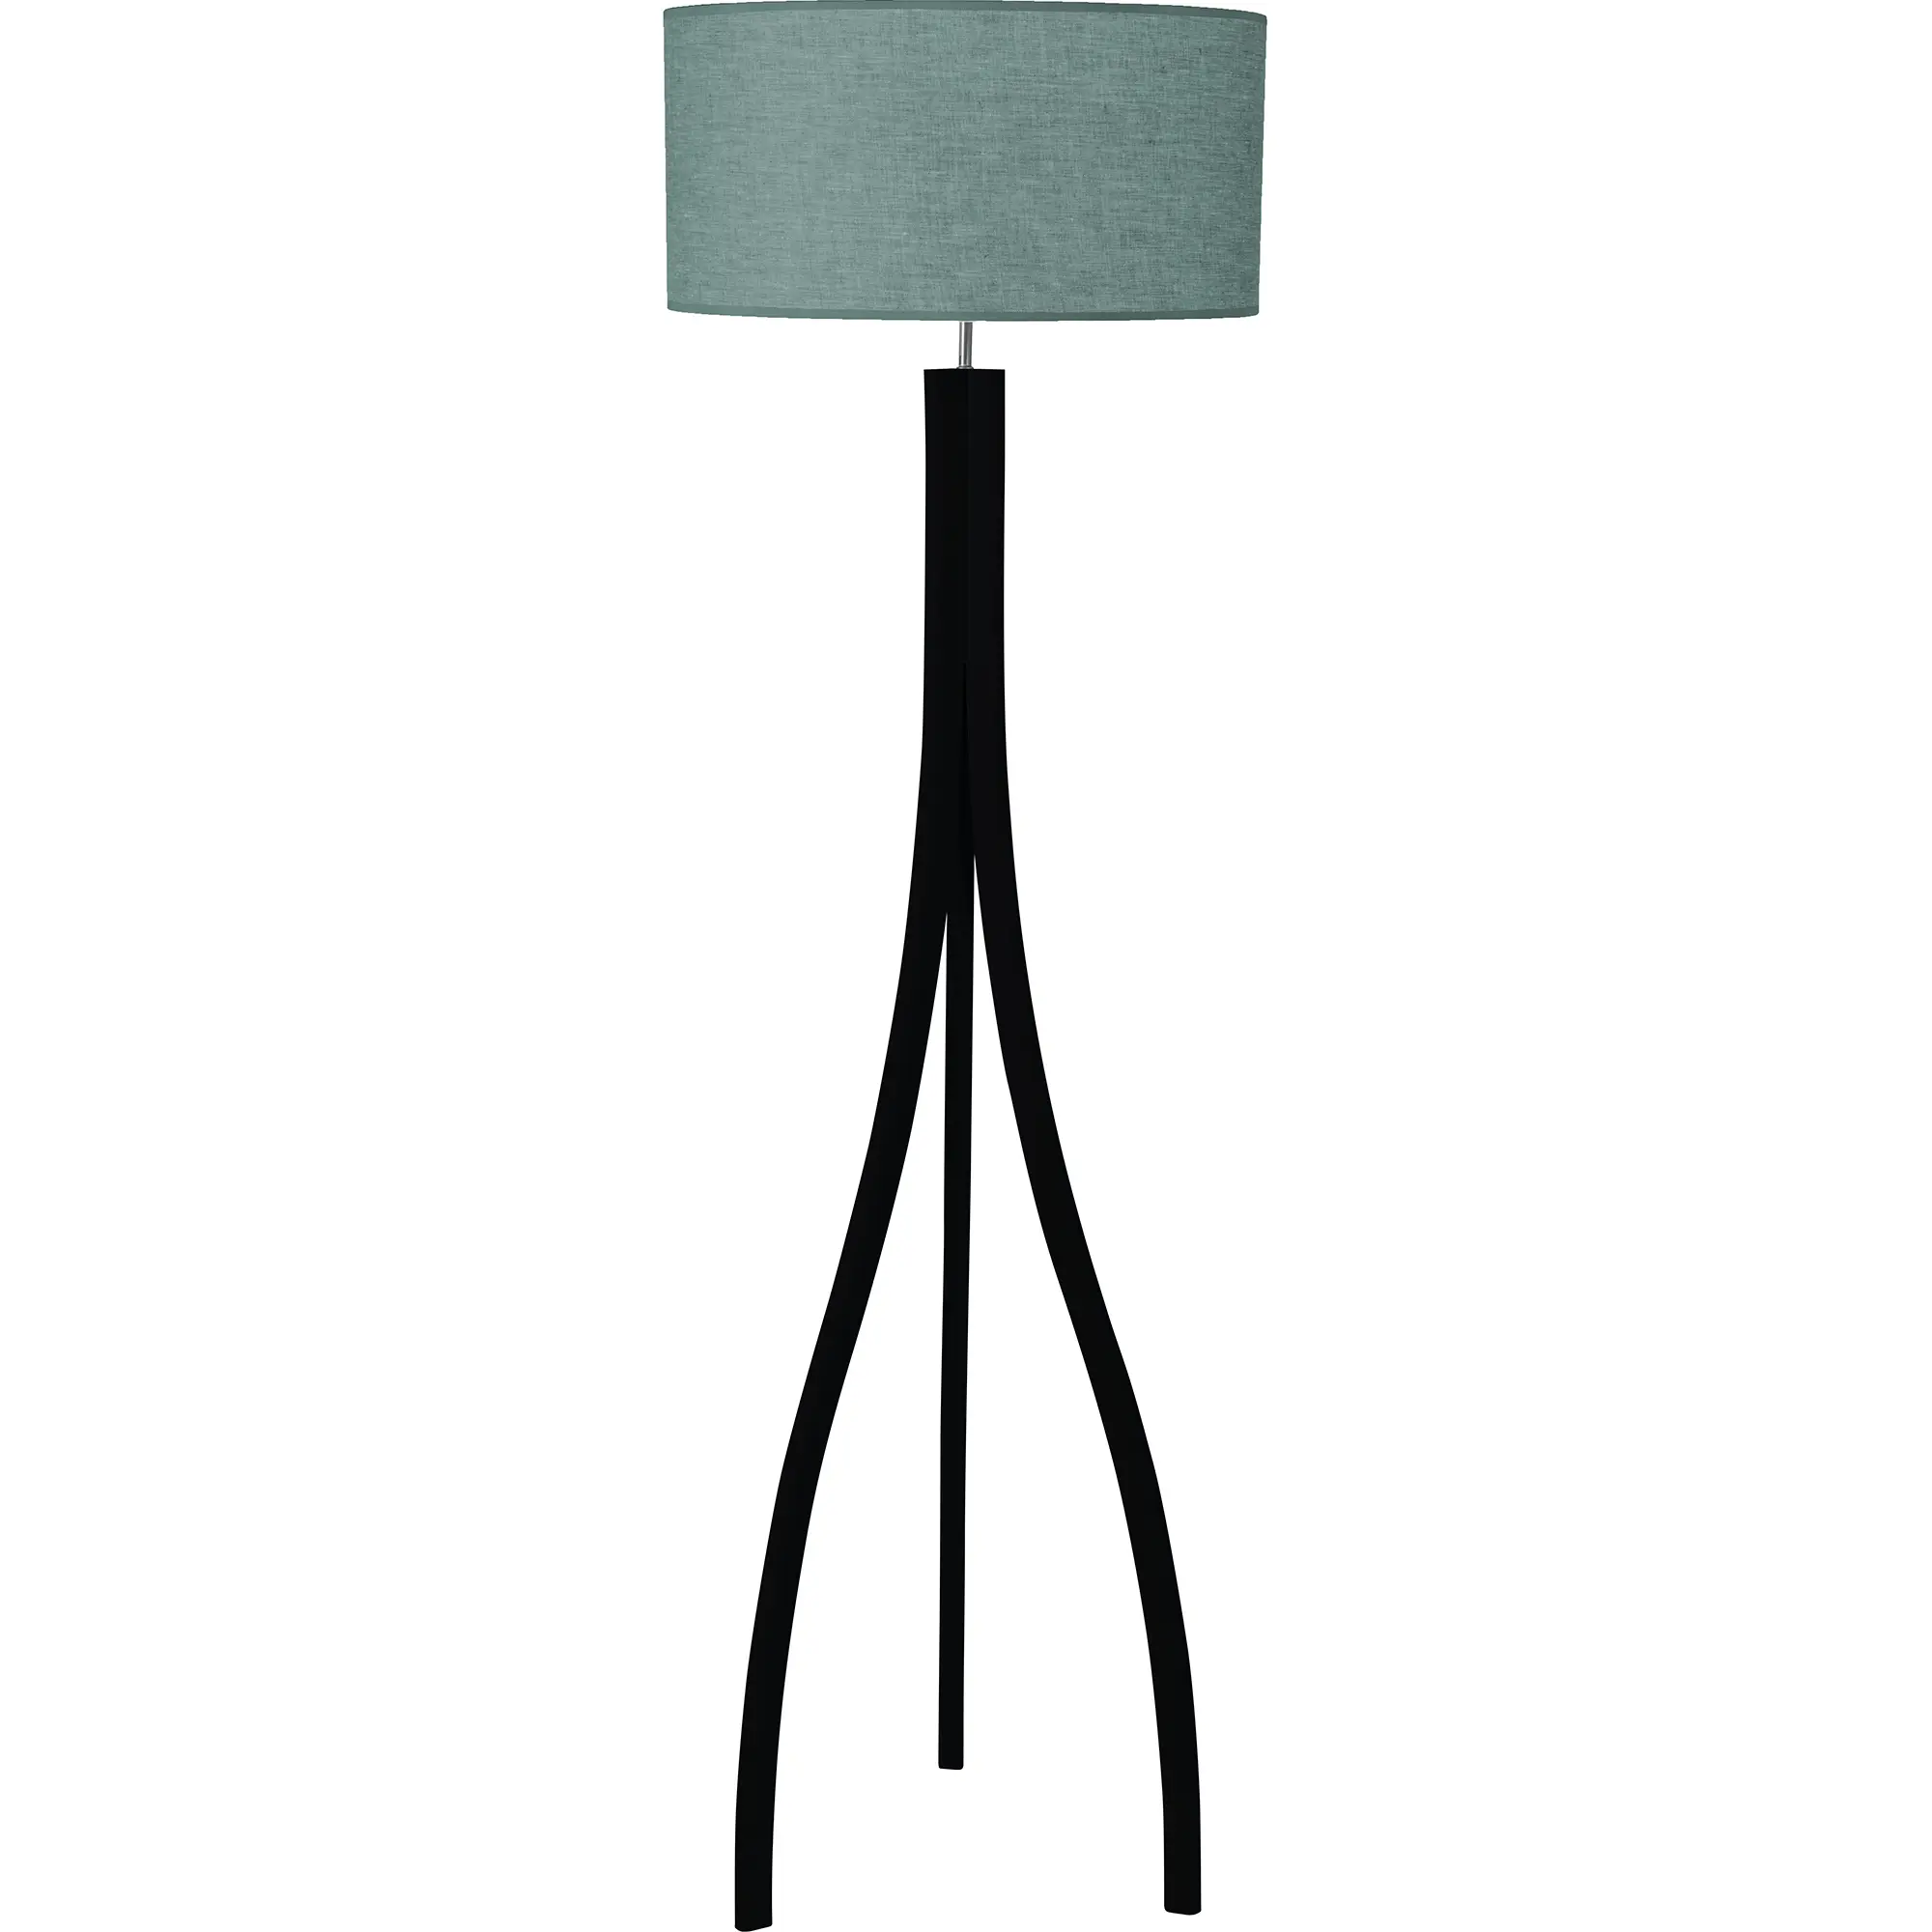 Holz-Stehlampe Skandinavia aus Esche in schwarz, mintgrün